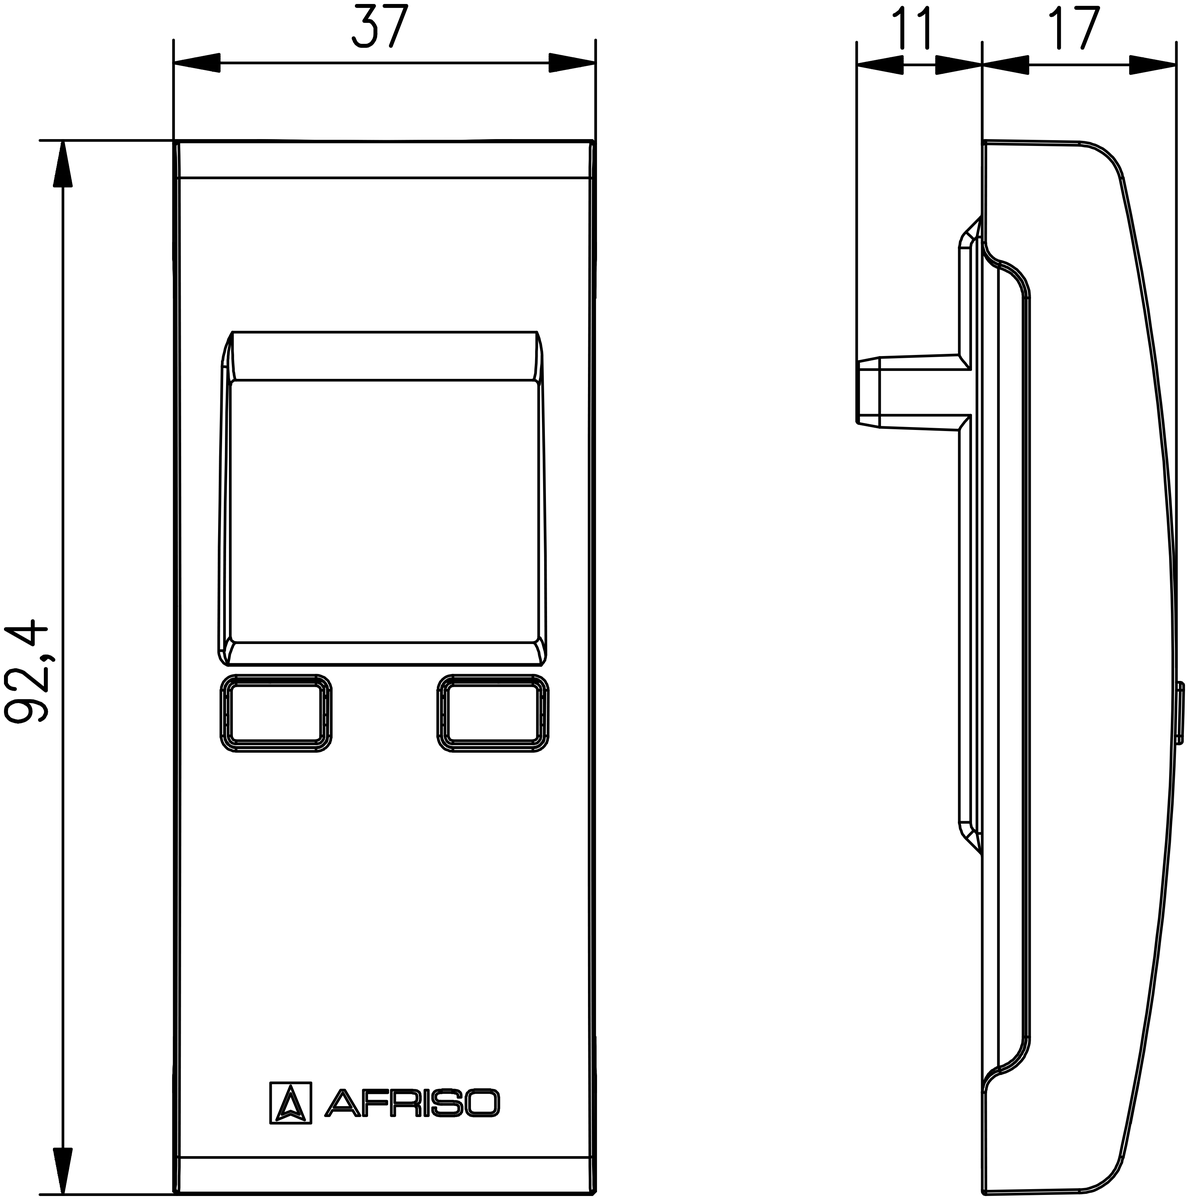 AFRISO Uhr-Modul UM für Basismodul BM BEF 8560